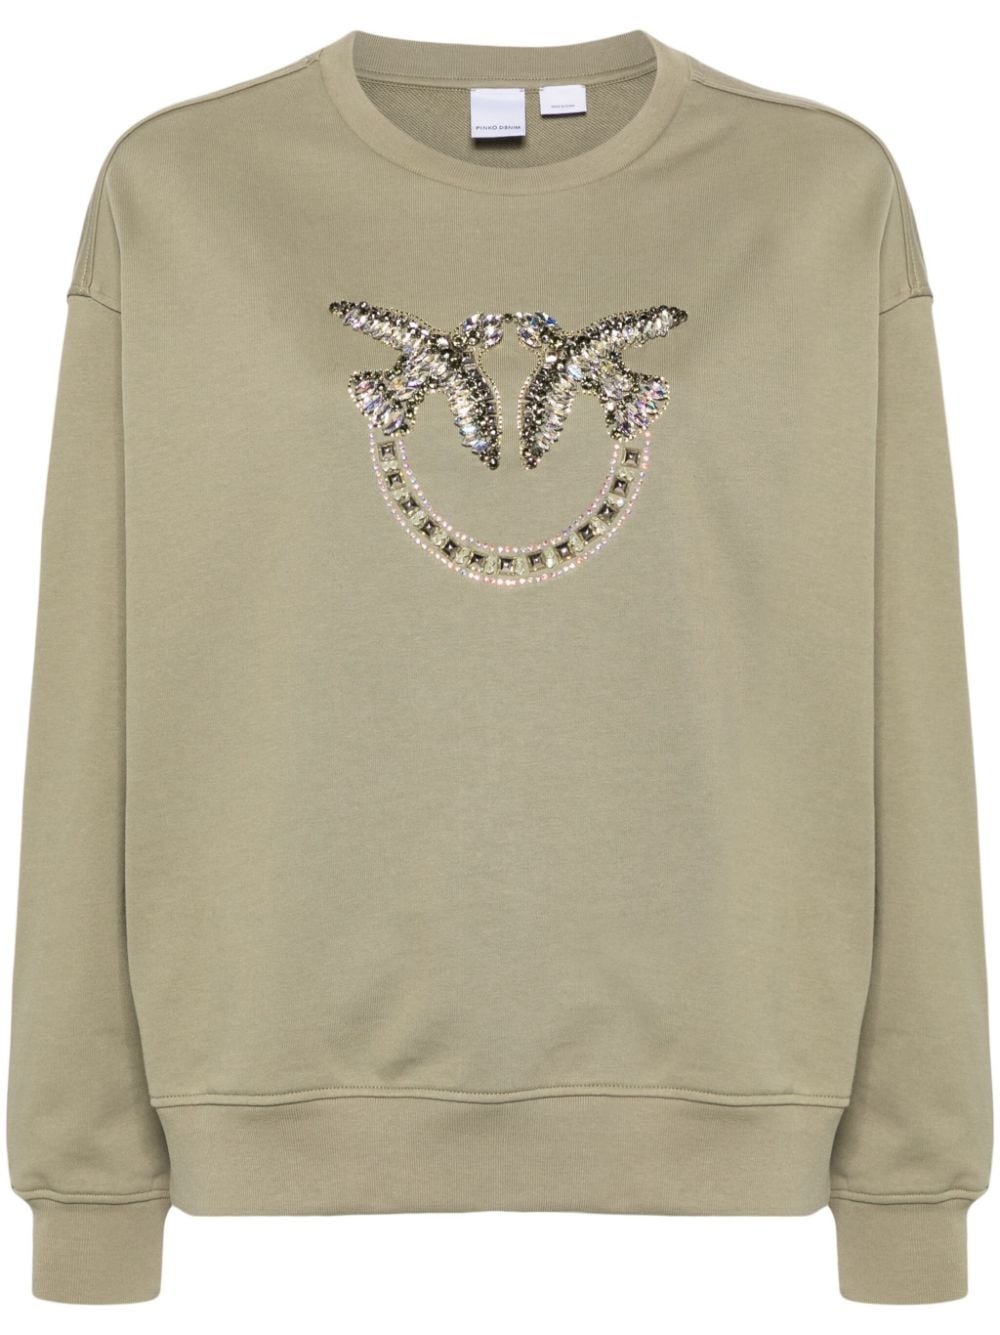 Love Birds embellished sweatshirt - 1